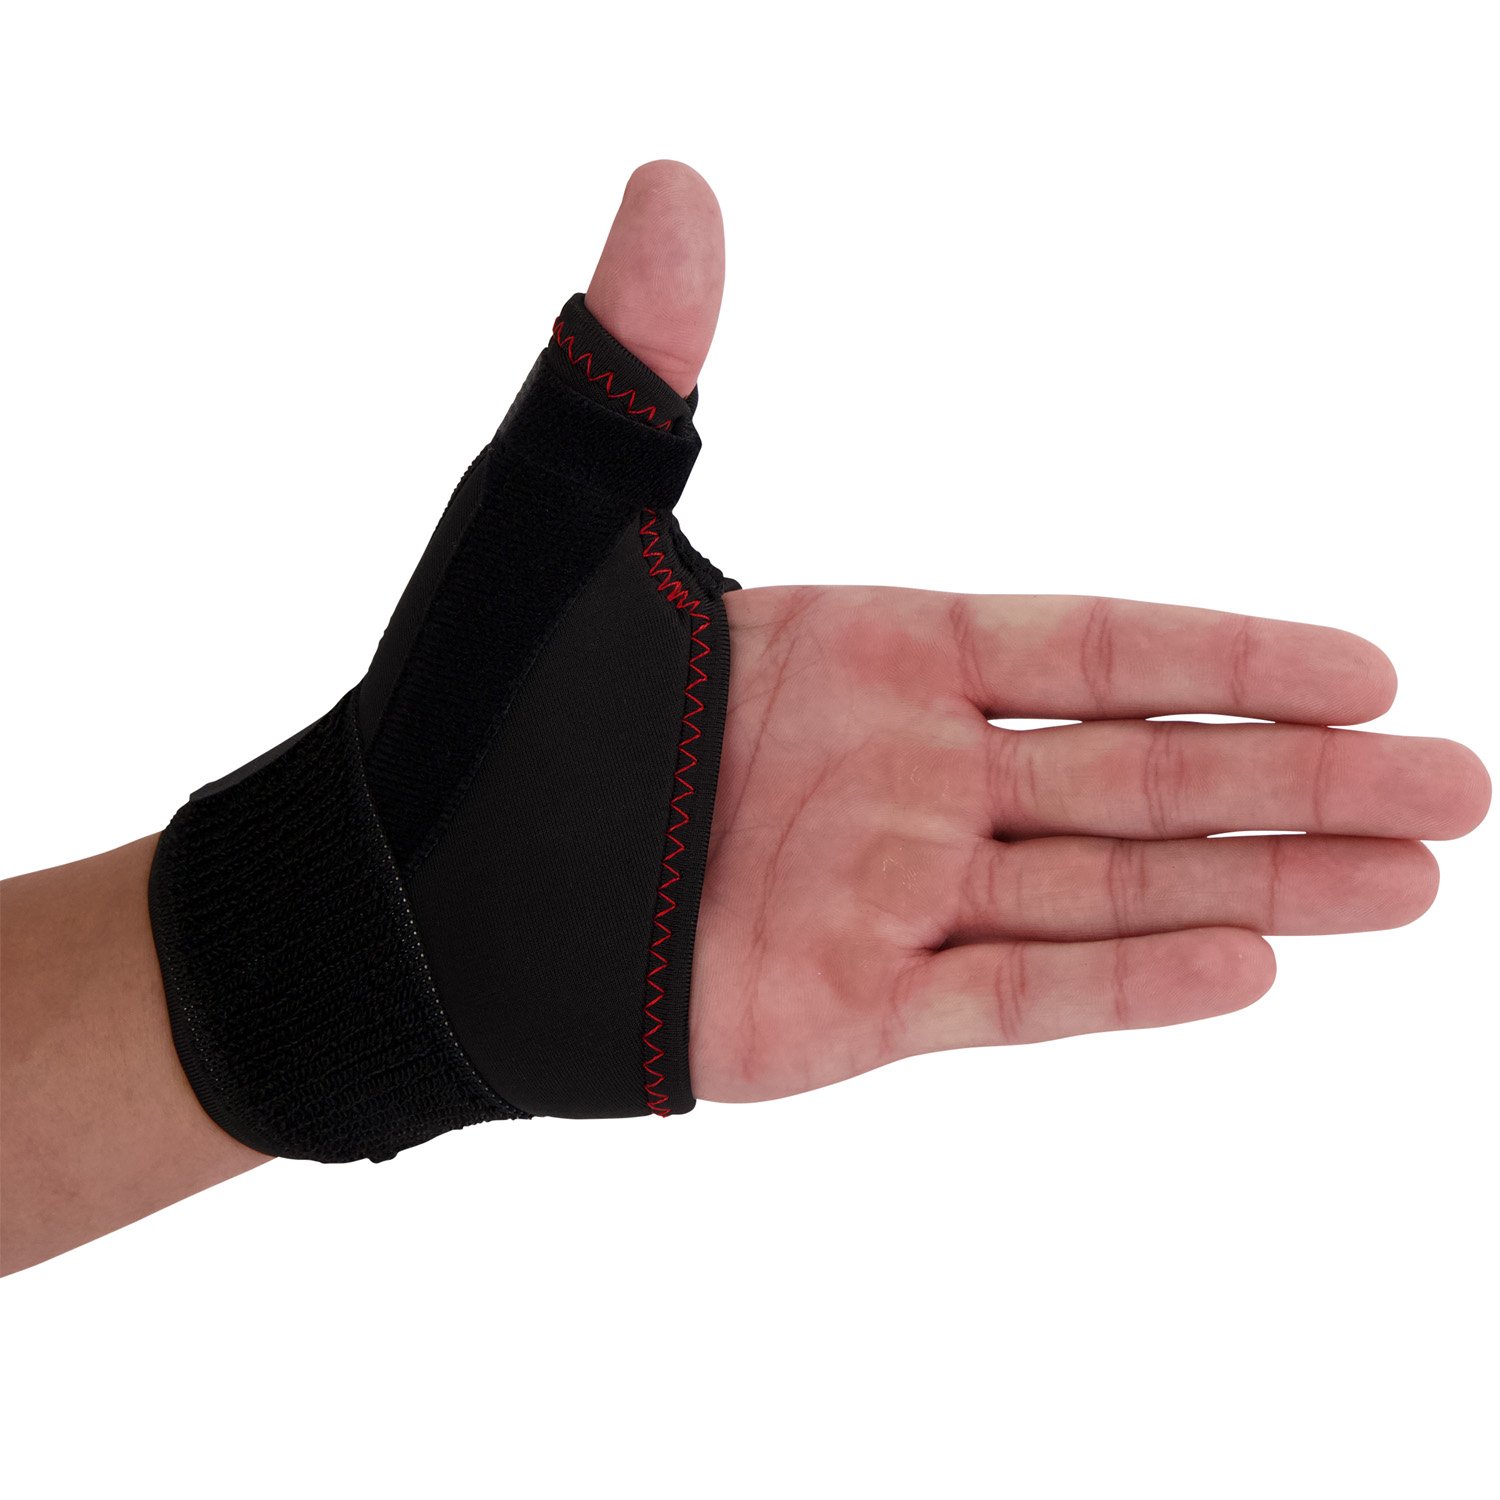 gladiator sports thumb wrist support worn on left hand